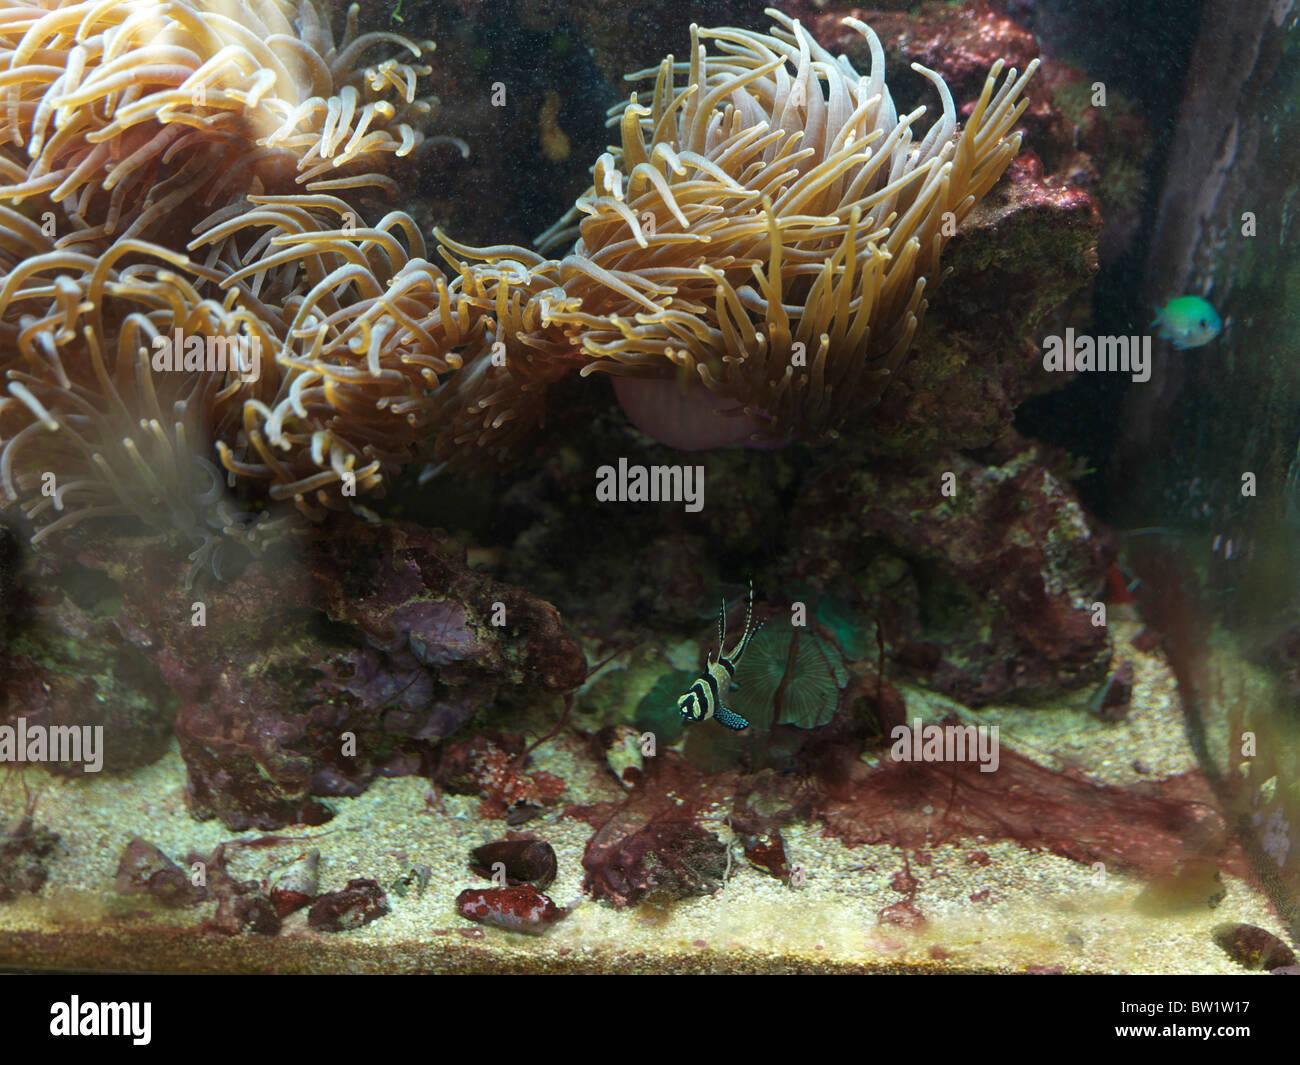 Fish Tank With Cyno Bacteria On Coral, Magnifica Anemones and Banggai Cardinalfish Stock Photo